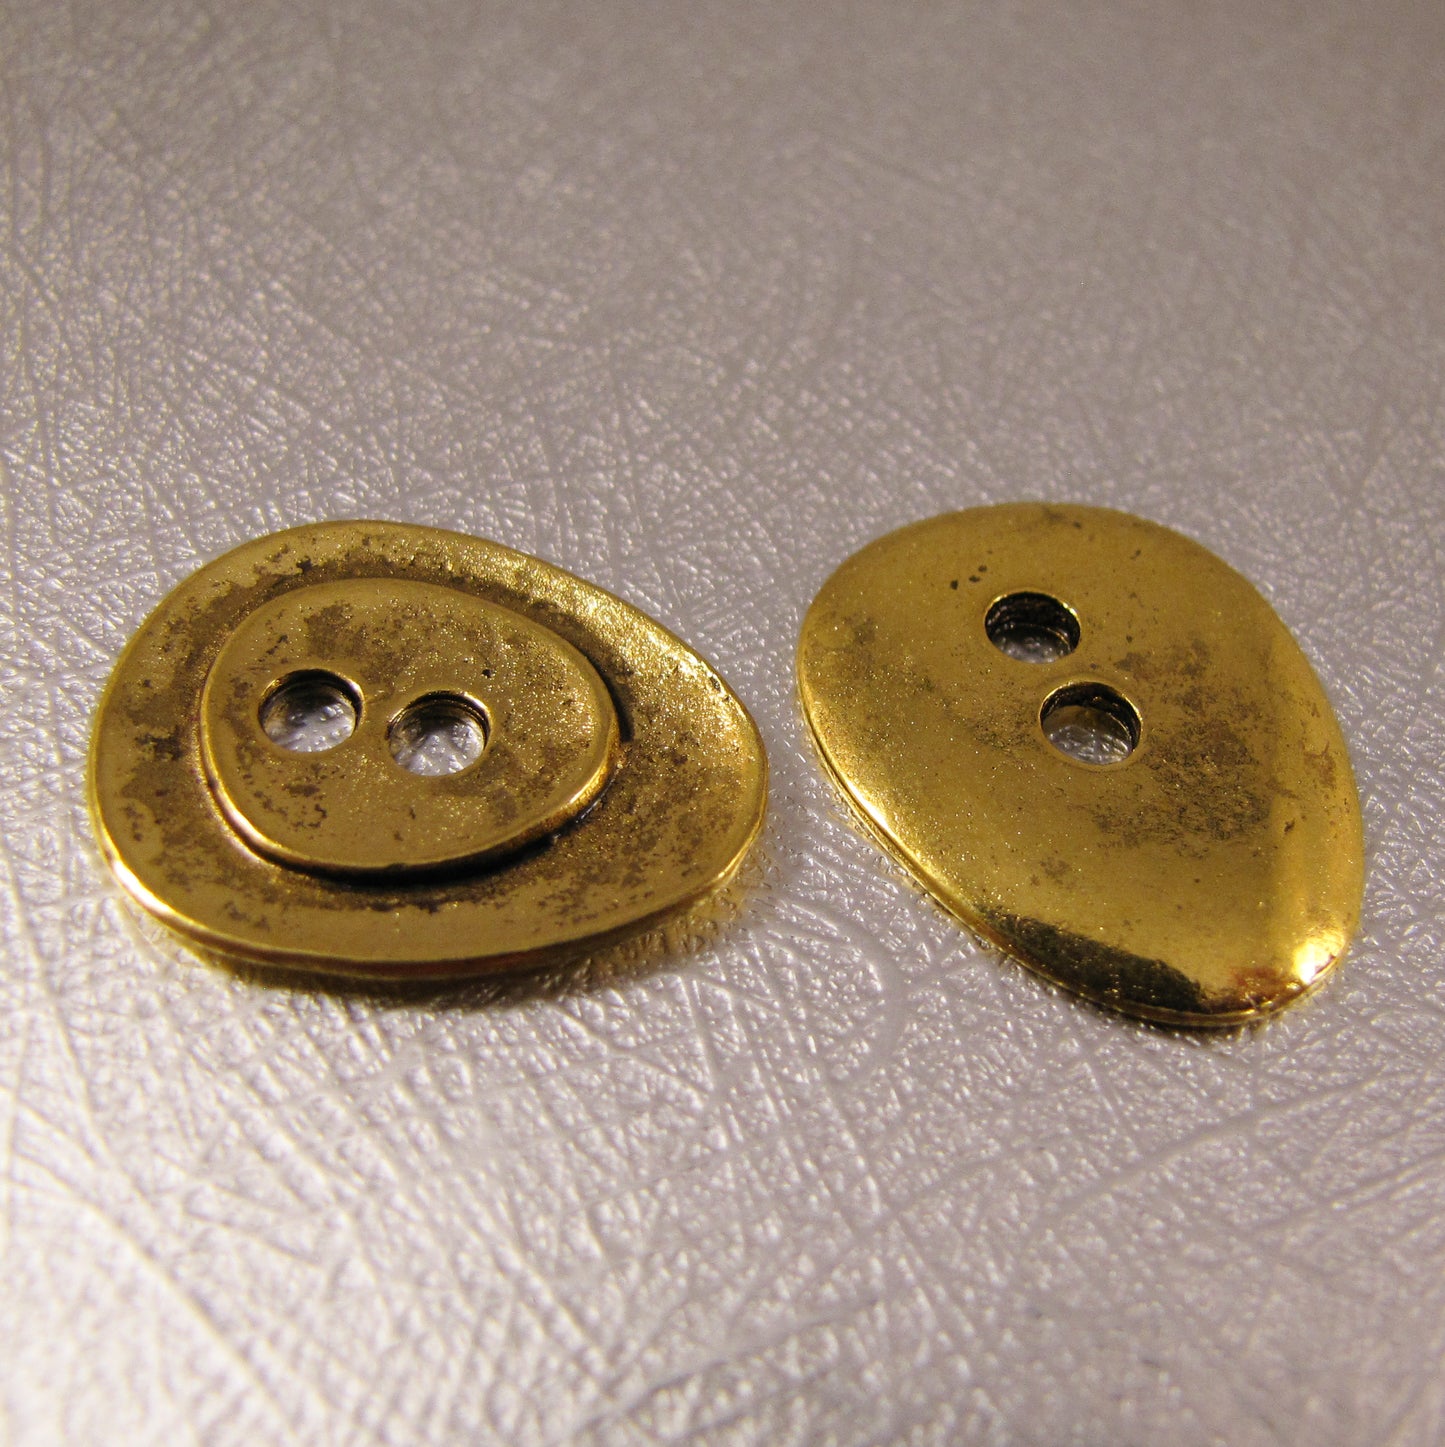 Buttons - Antique Gold